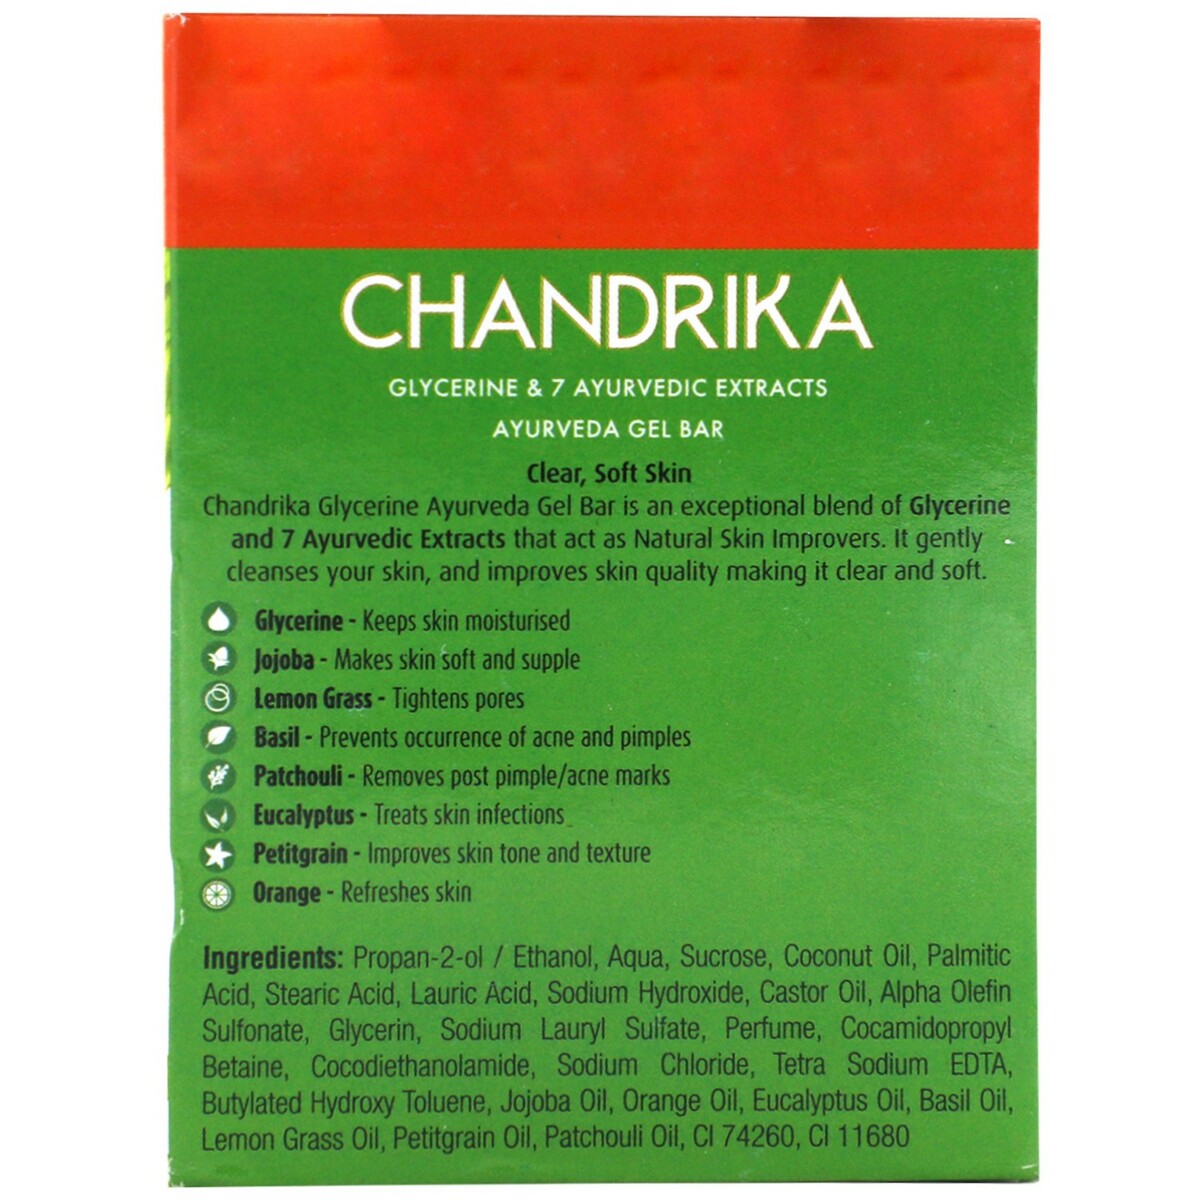 Chandrika Soap Glycerine 125g 2+1 Free